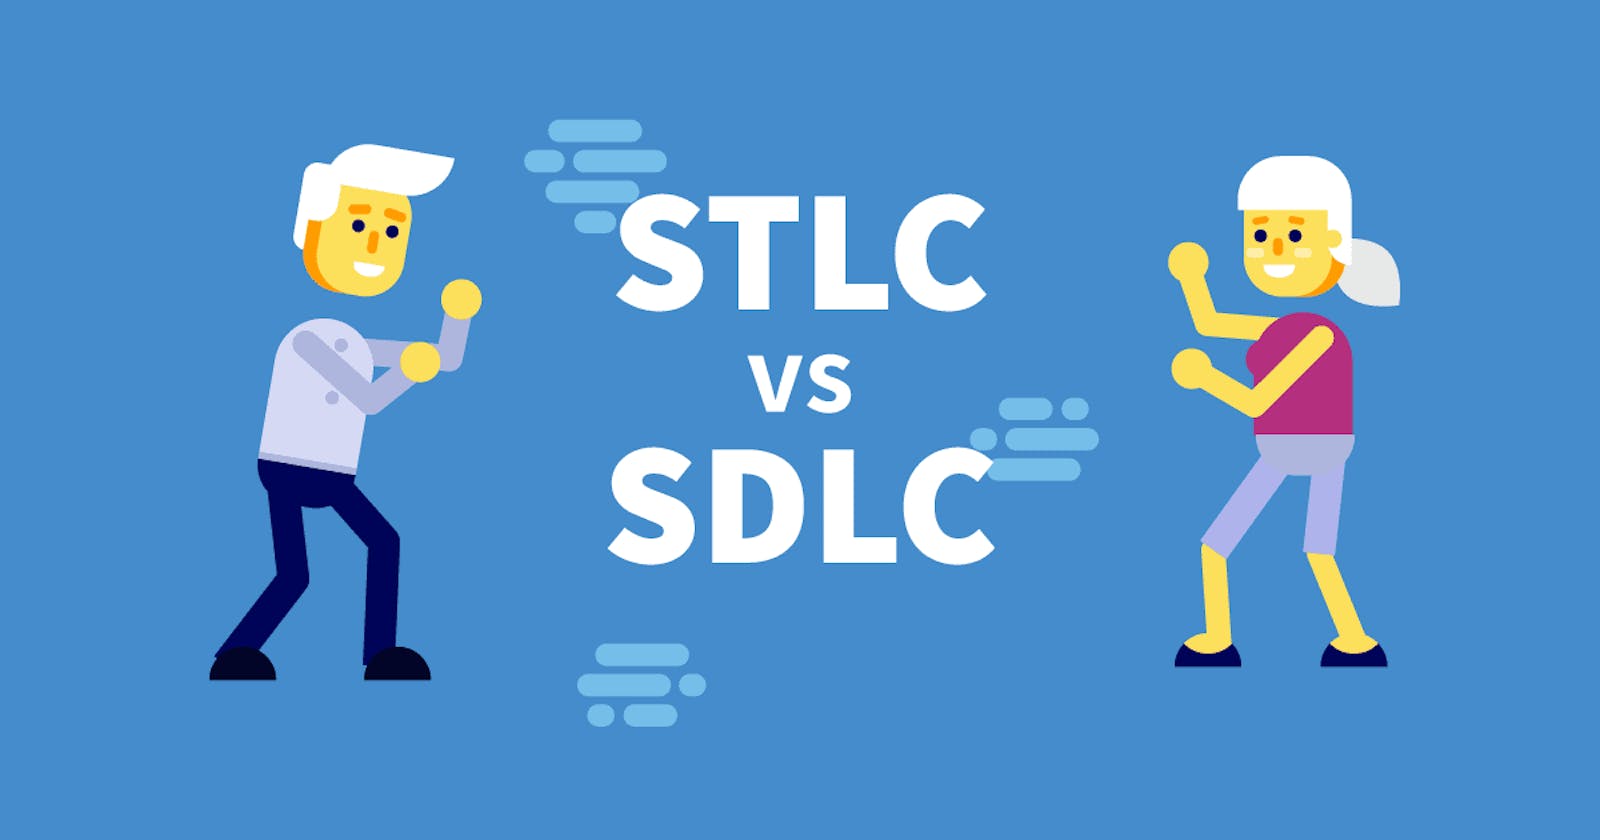 Software development life cycle (SDLC) vs Software testing life cycle (STLC)